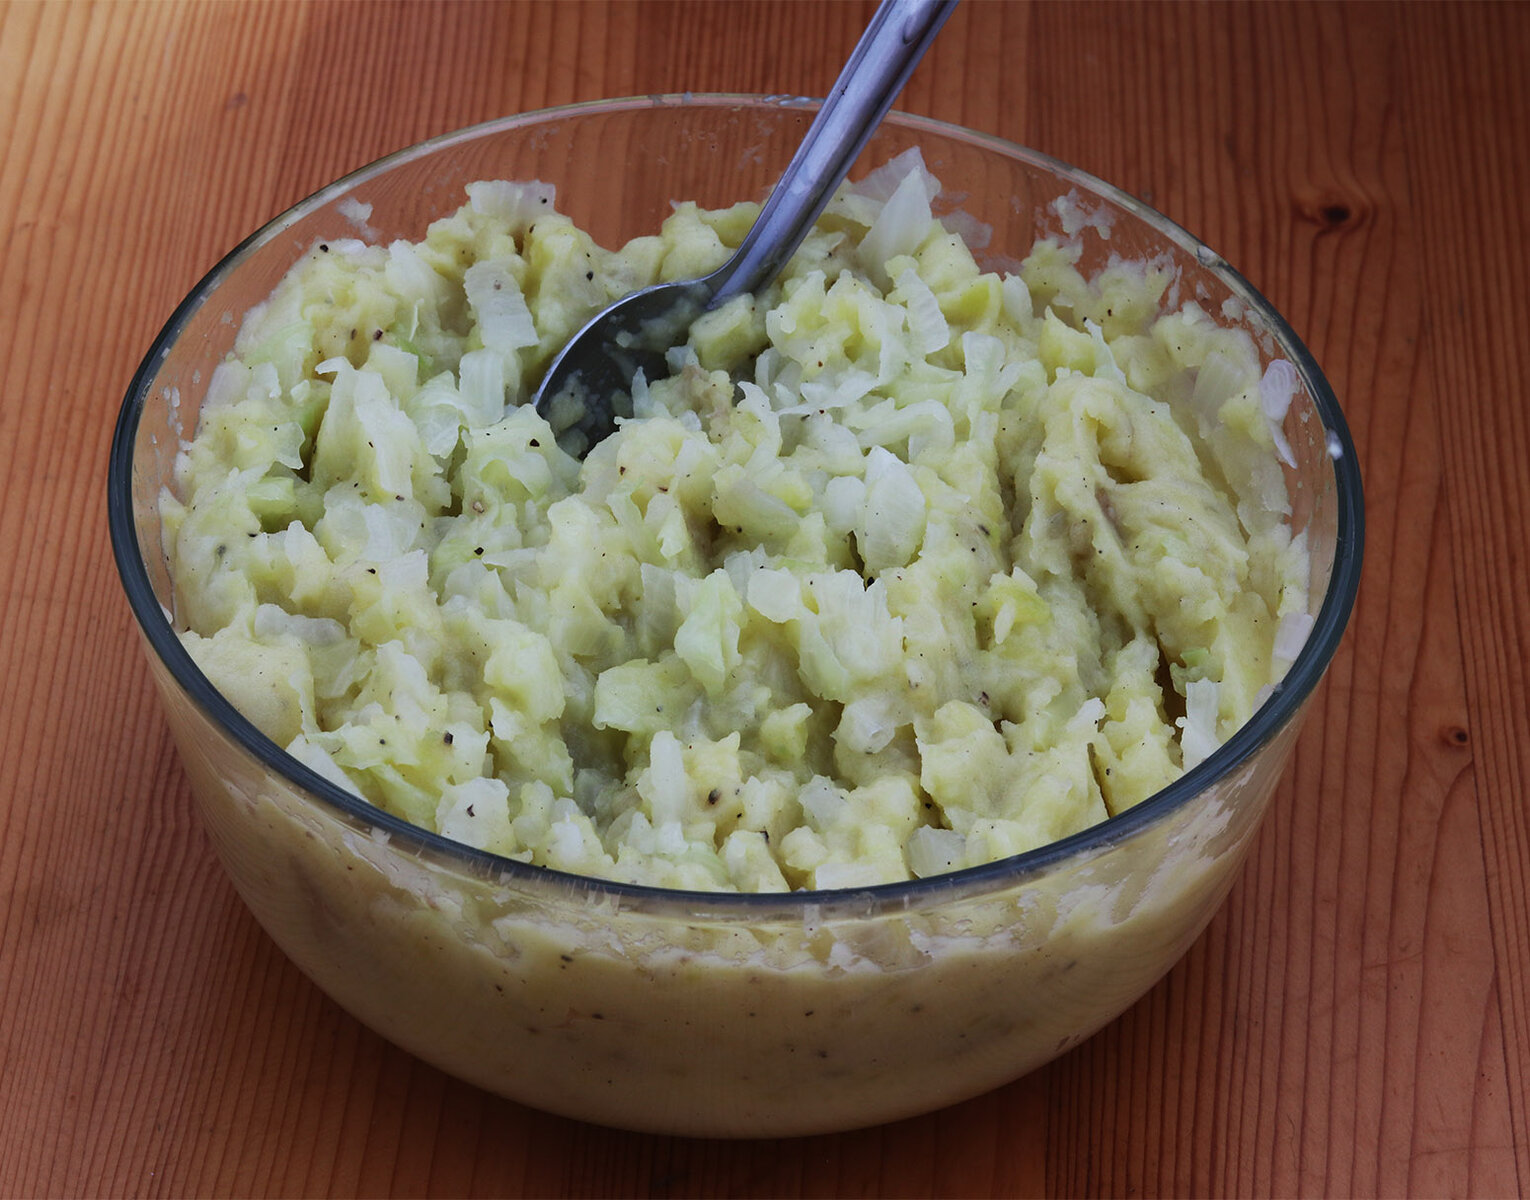 Potato-cabbage-onion s.jpg